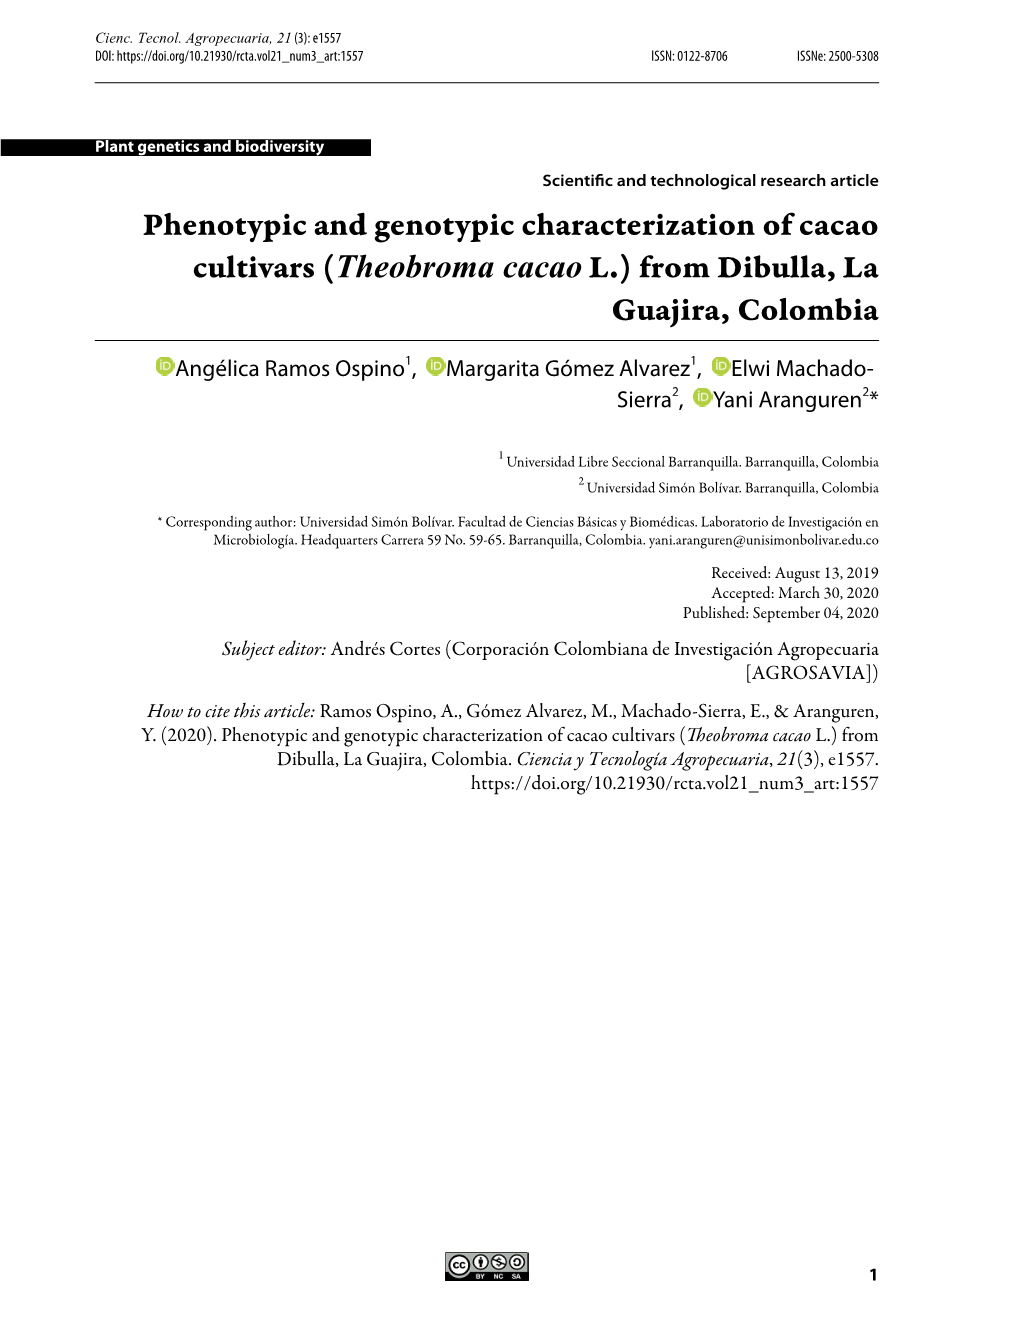 Phenotypic and Genotypic Characterization of Cacao Cultivars (Theobroma Cacao L.) from Dibulla, La Guajira, Colombia